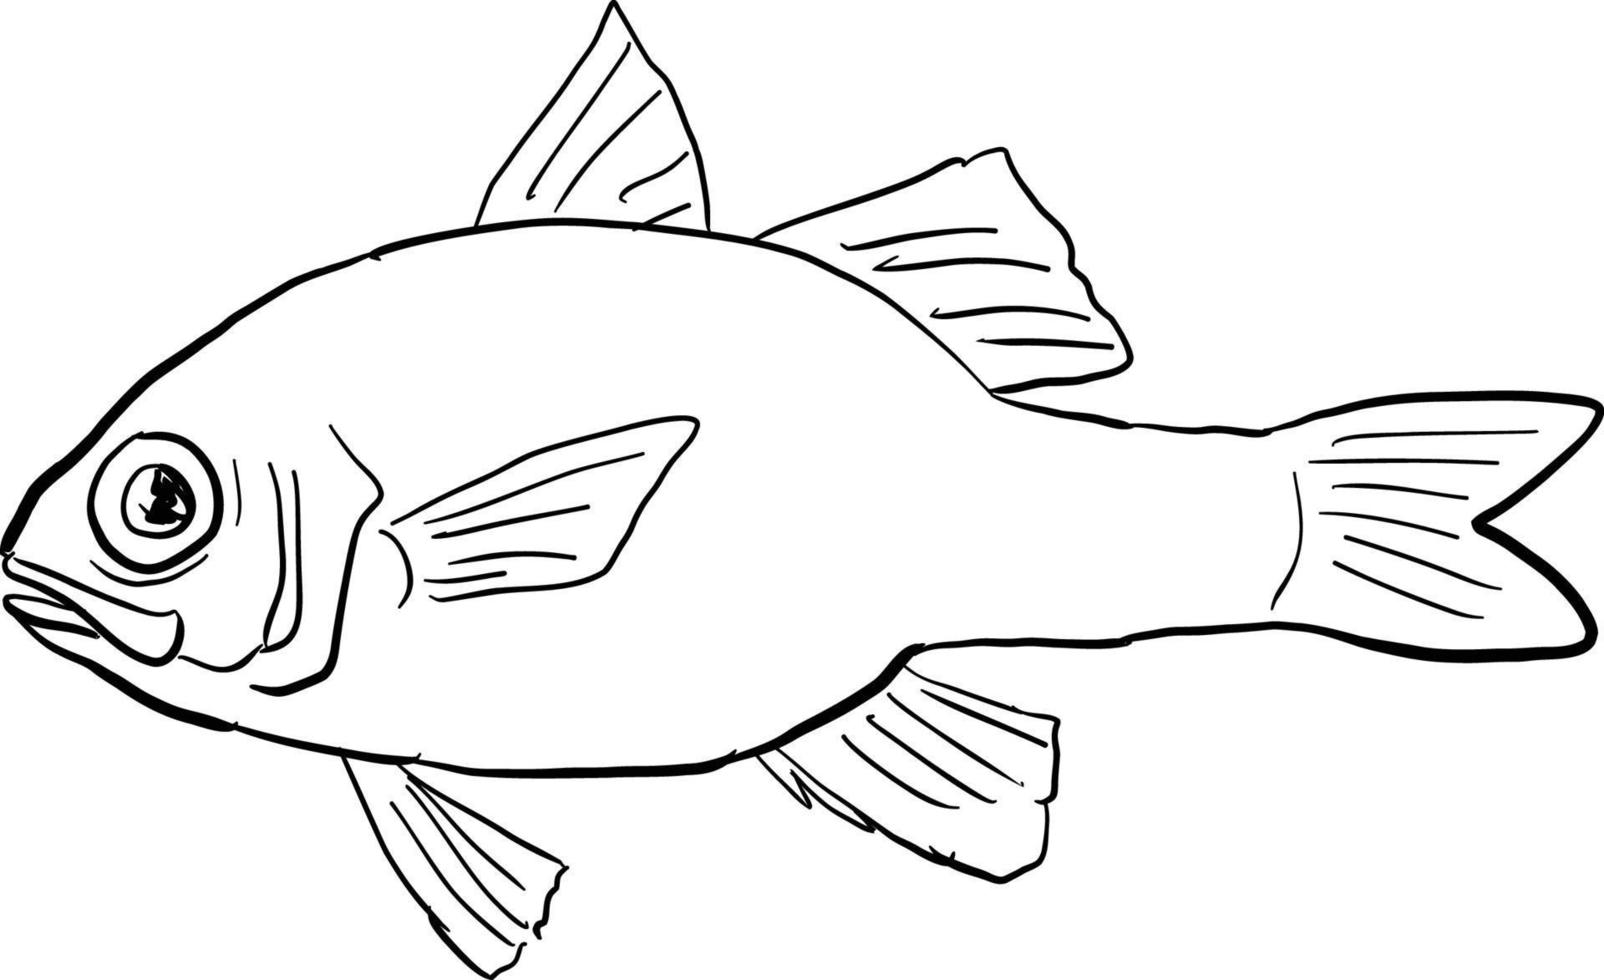 Hawaiian ruby cardinalfish-HAWAII-FISH-DWG-BW-CUT vector